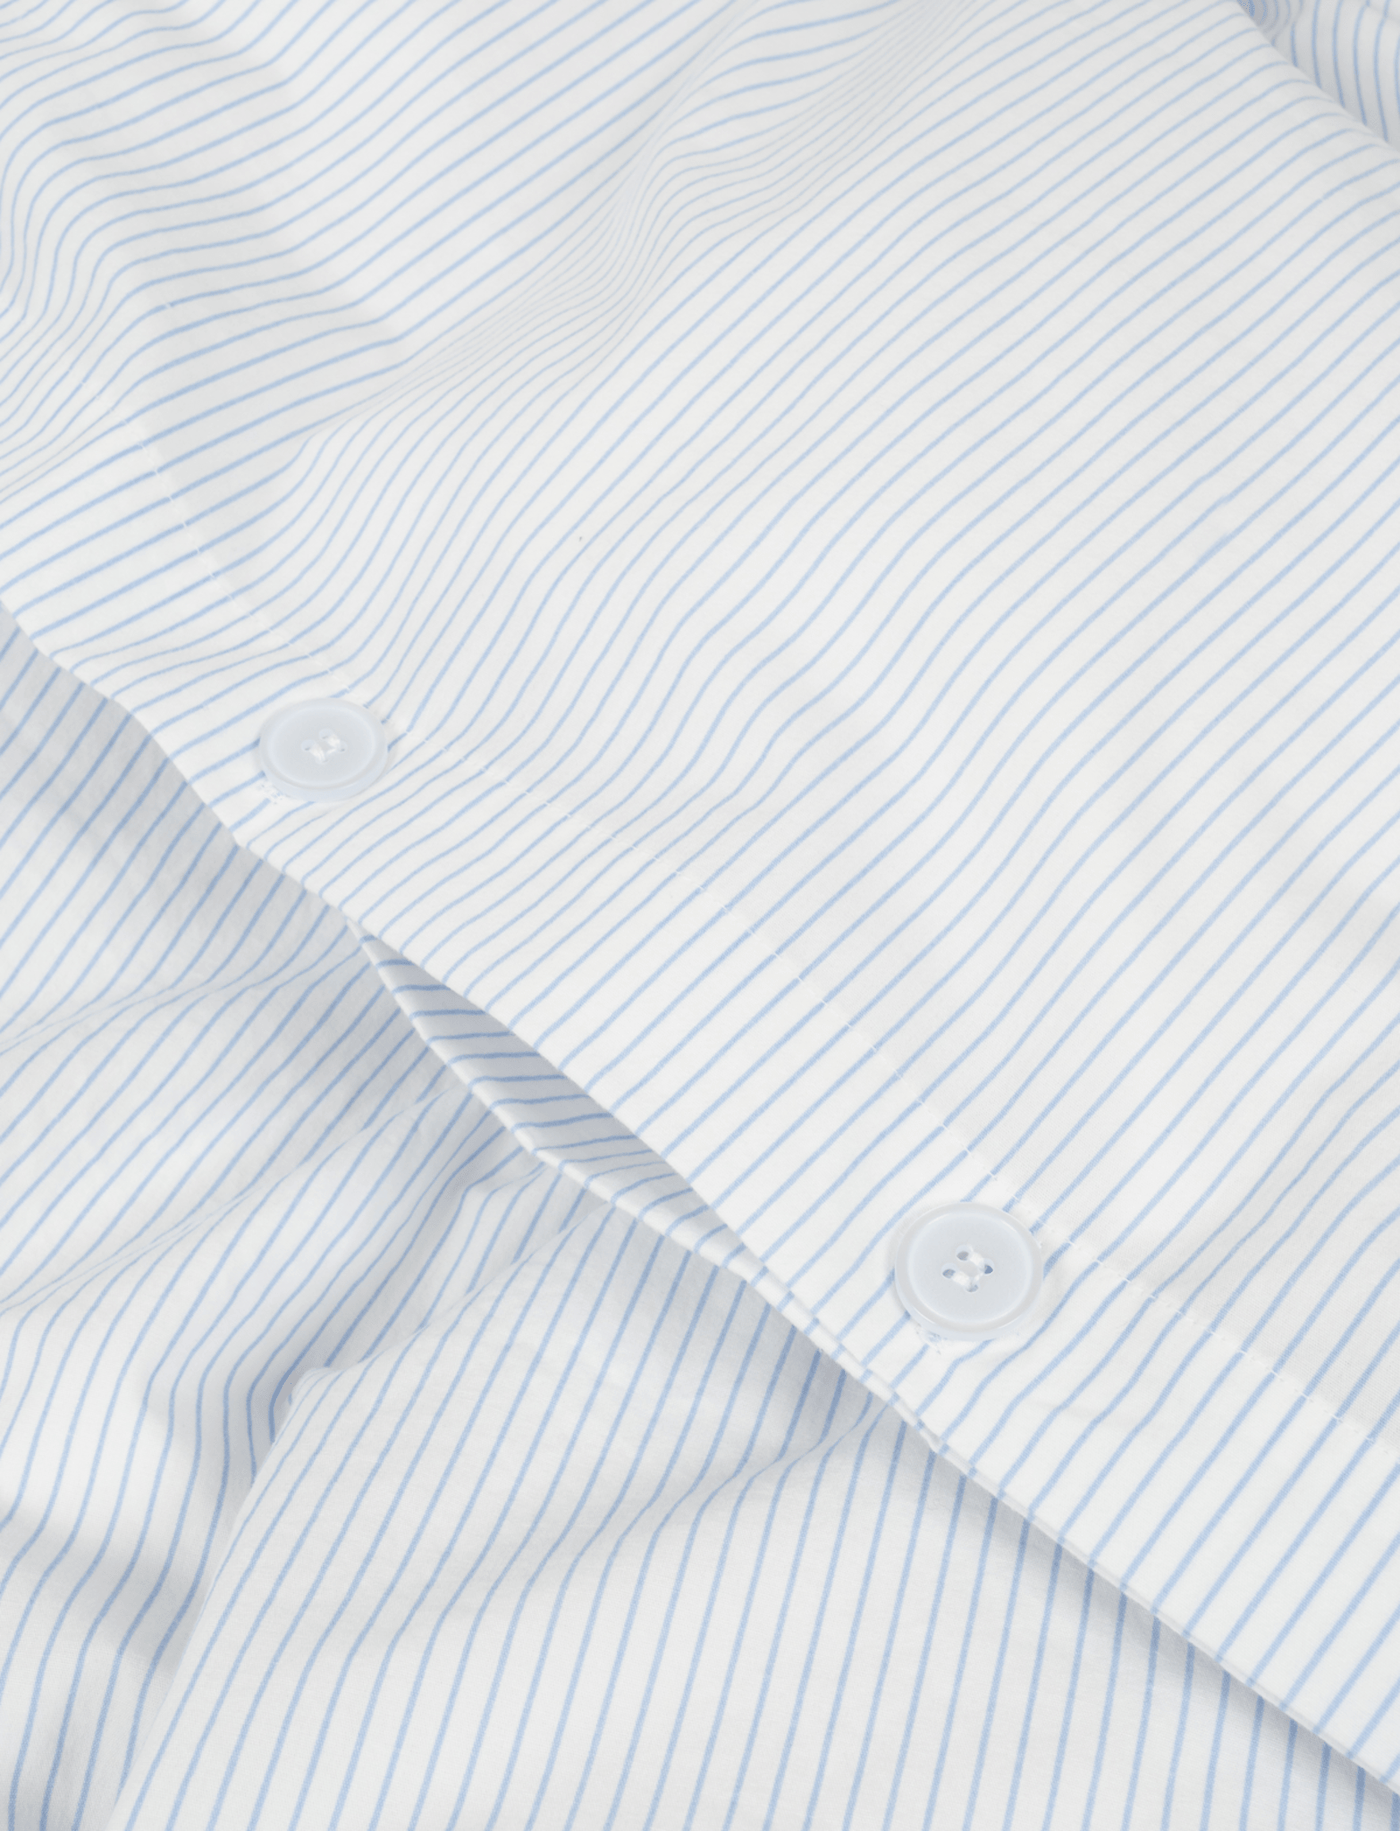 Bedding 150x210 cm - Oxford Stripe